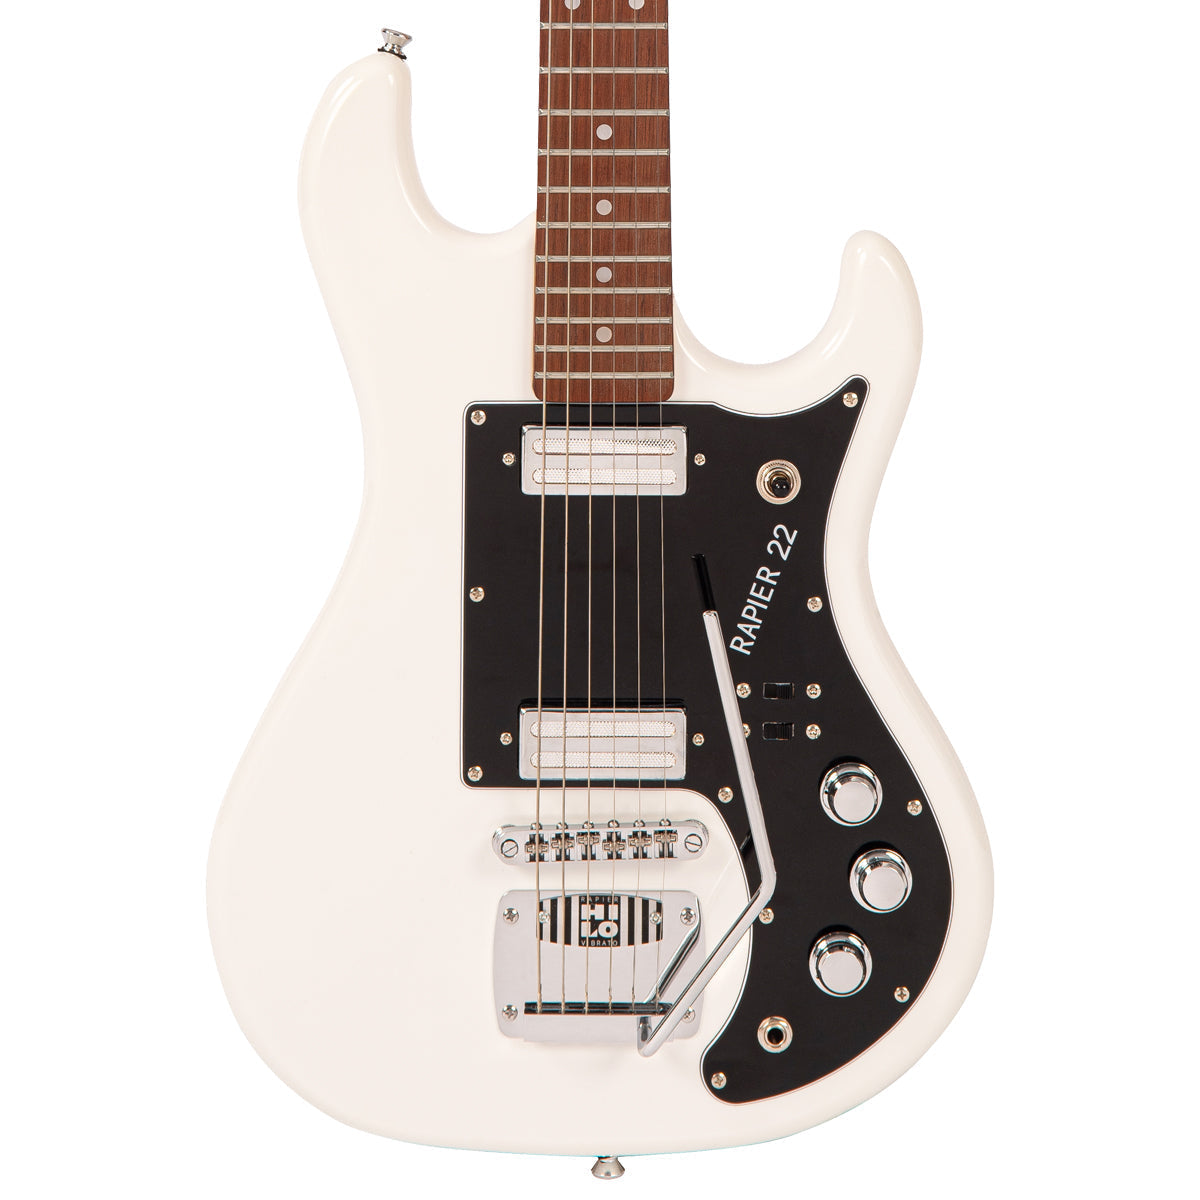 Rapier 22 Electric Guitar ~ Arctic White, Electric Guitar for sale at Richards Guitars.